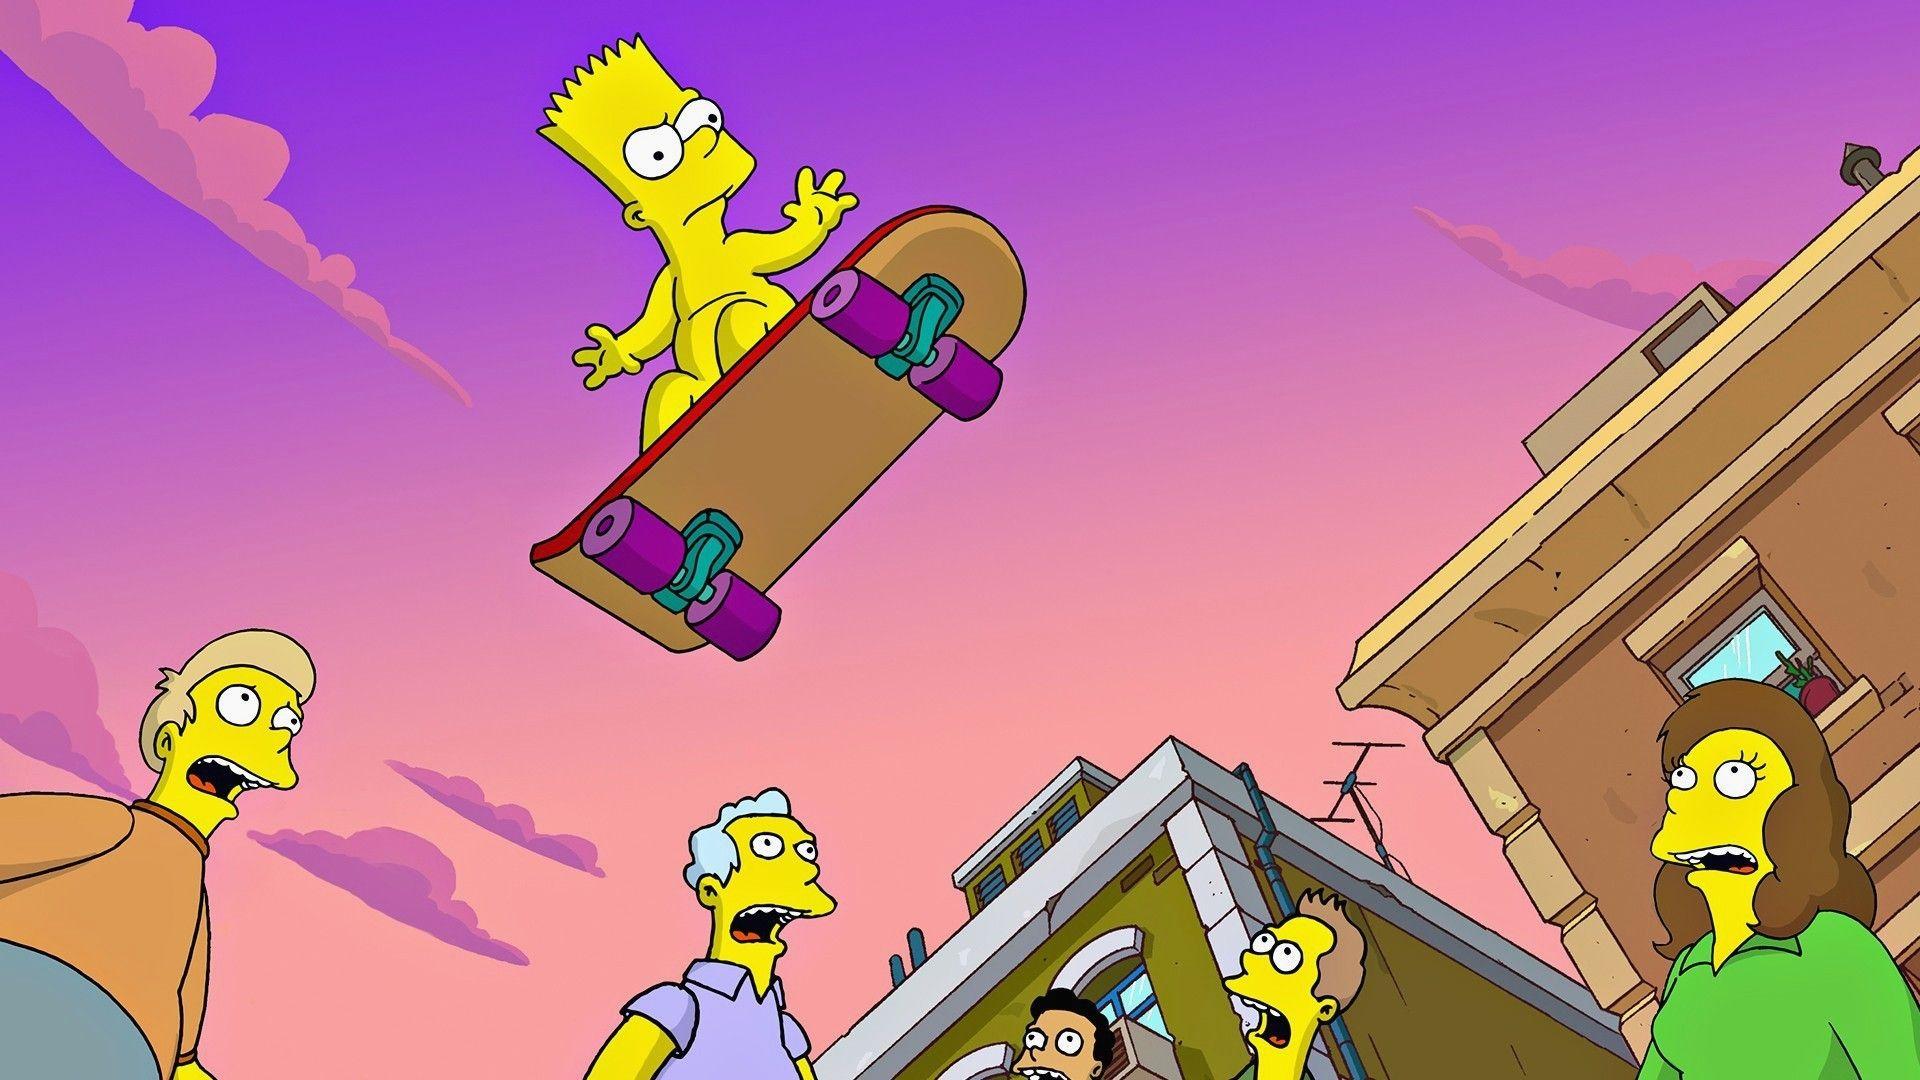 Aesthetic Bart Simpson iPhone Wallpaper Free